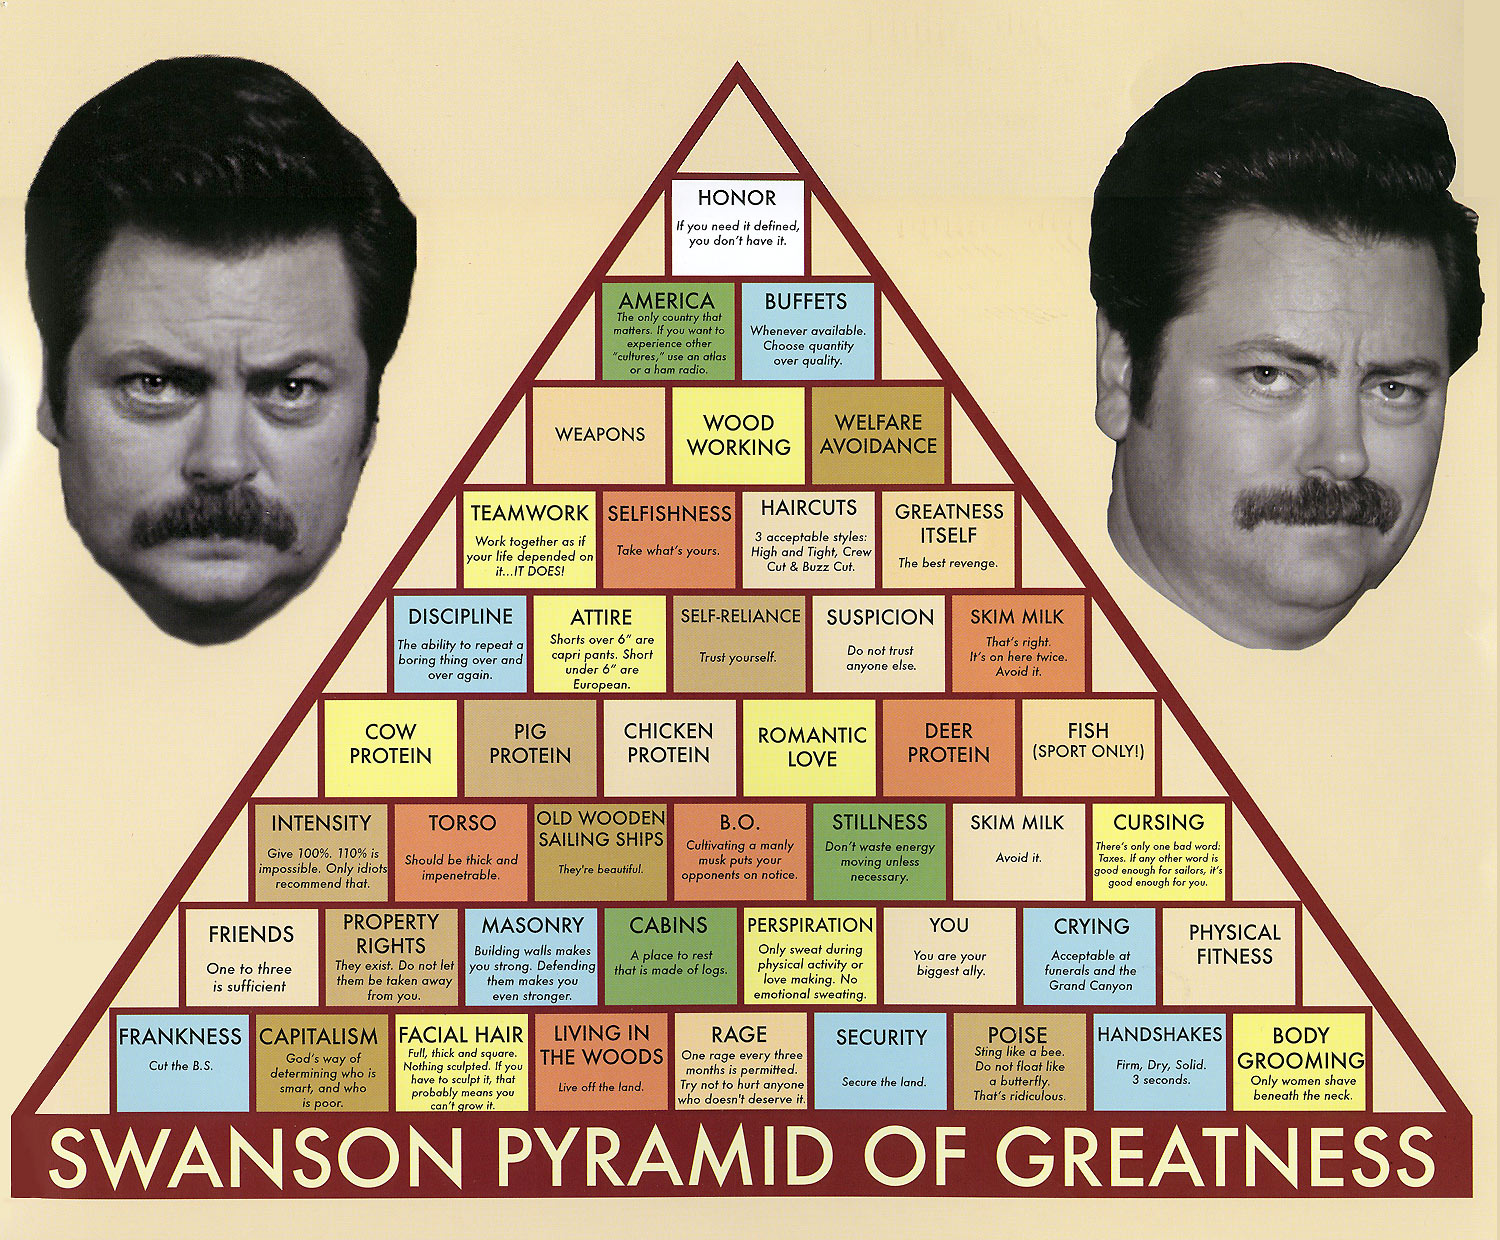 Swanson pyramid of greatness